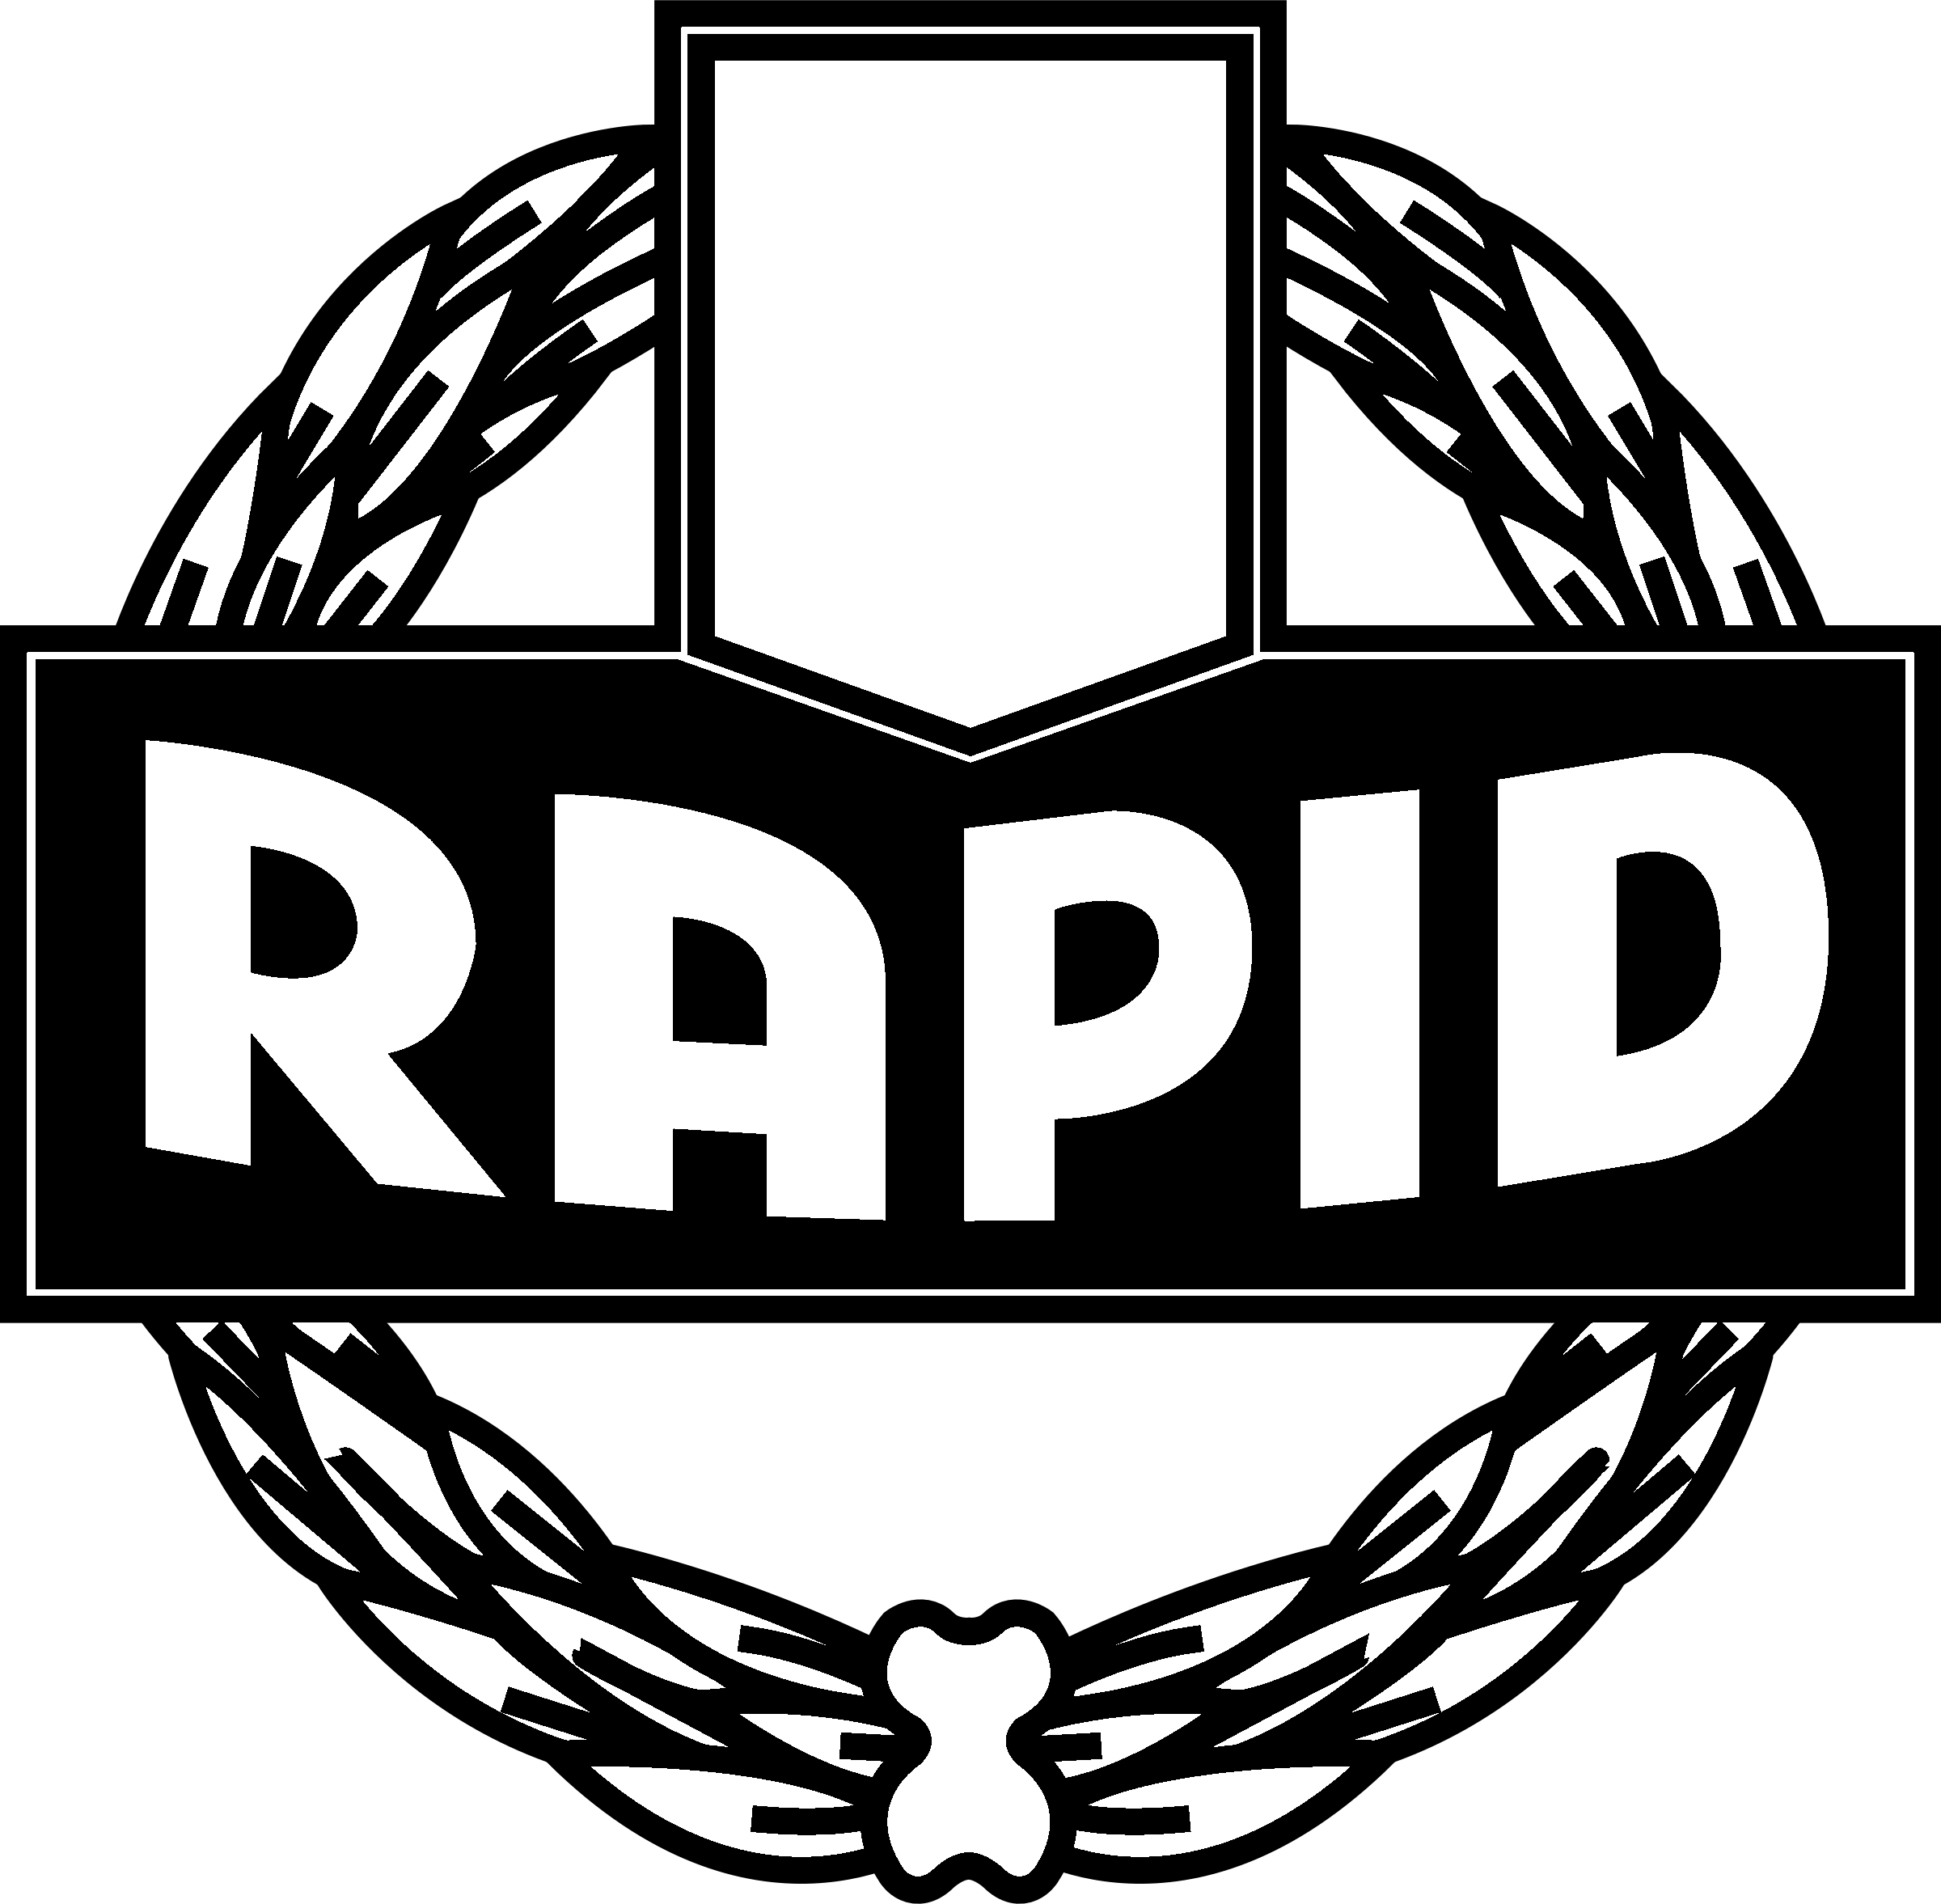 Rapid Logo - RAPID Logo PNG Transparent & SVG Vector - Freebie Supply